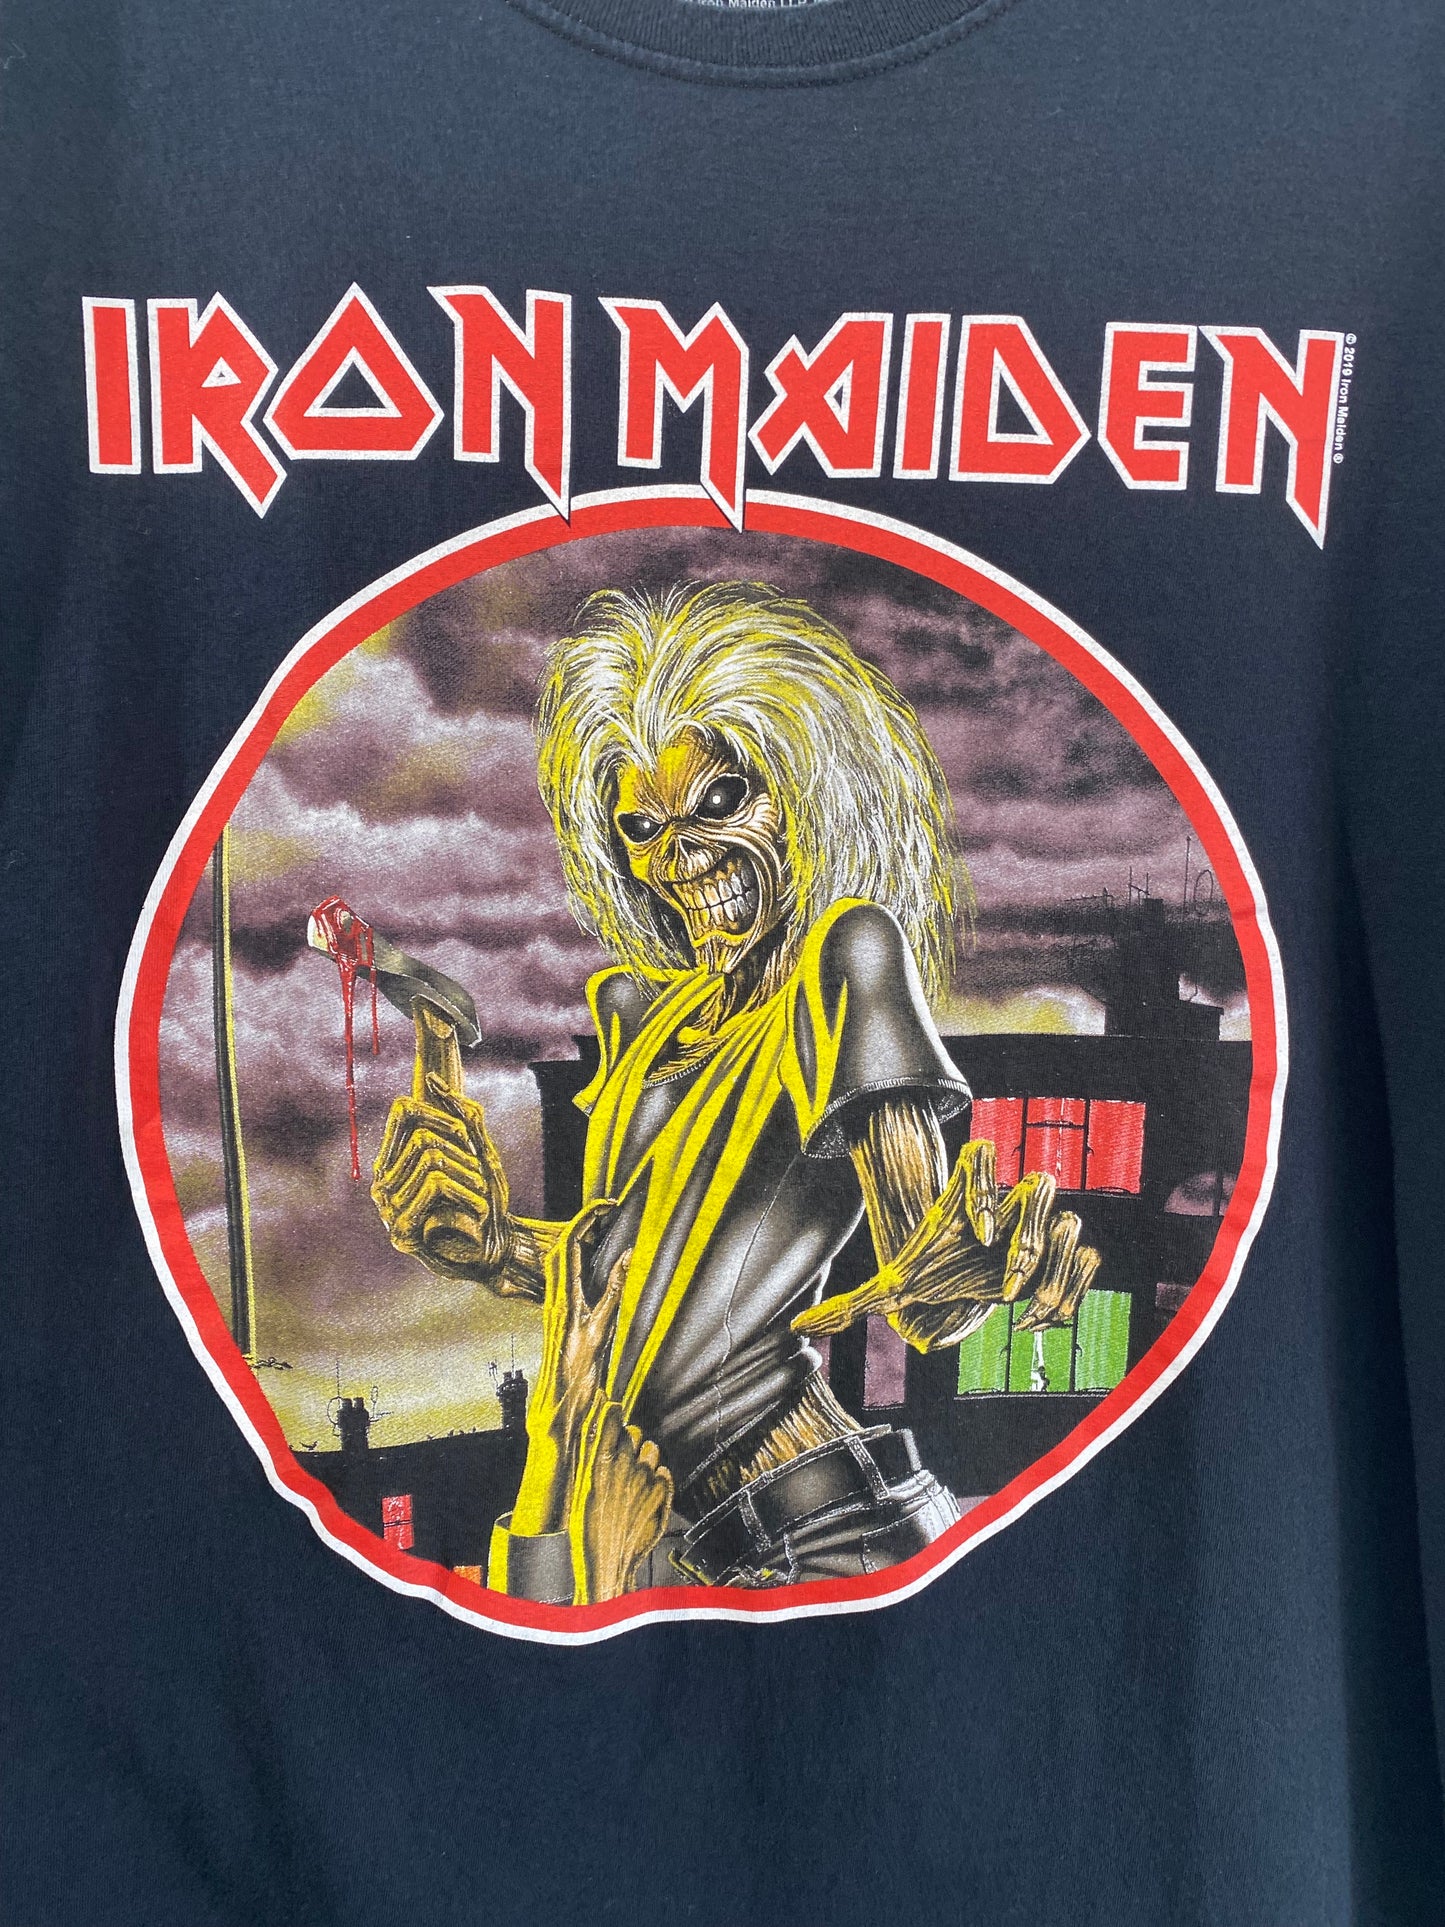 Iron Maiden graphic tee